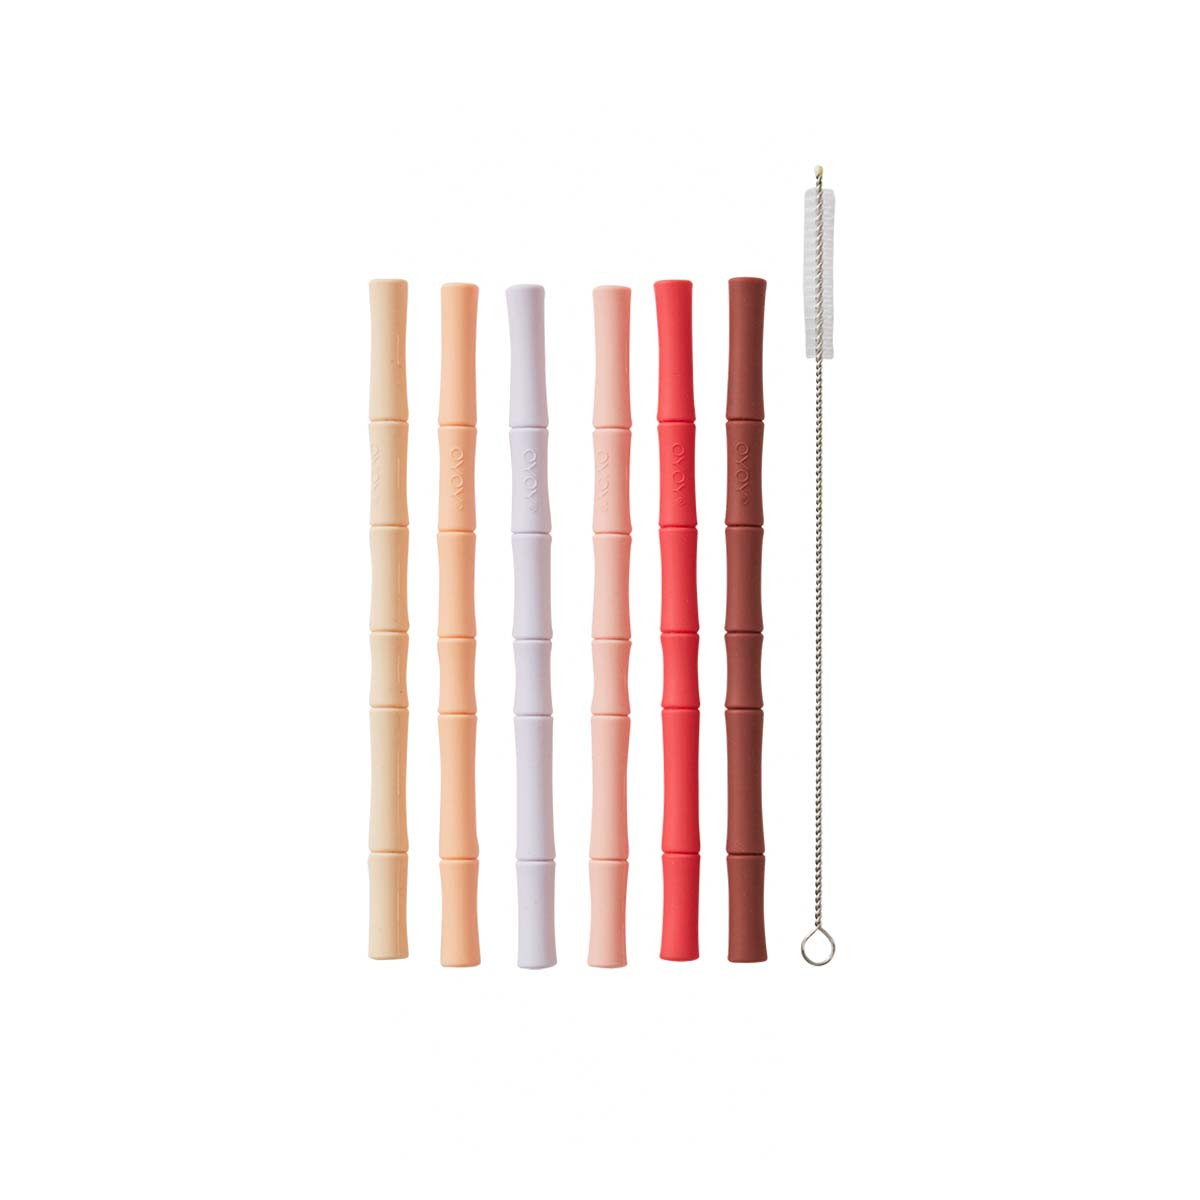 OYOY bamboo silicone straw-5712195046125-31